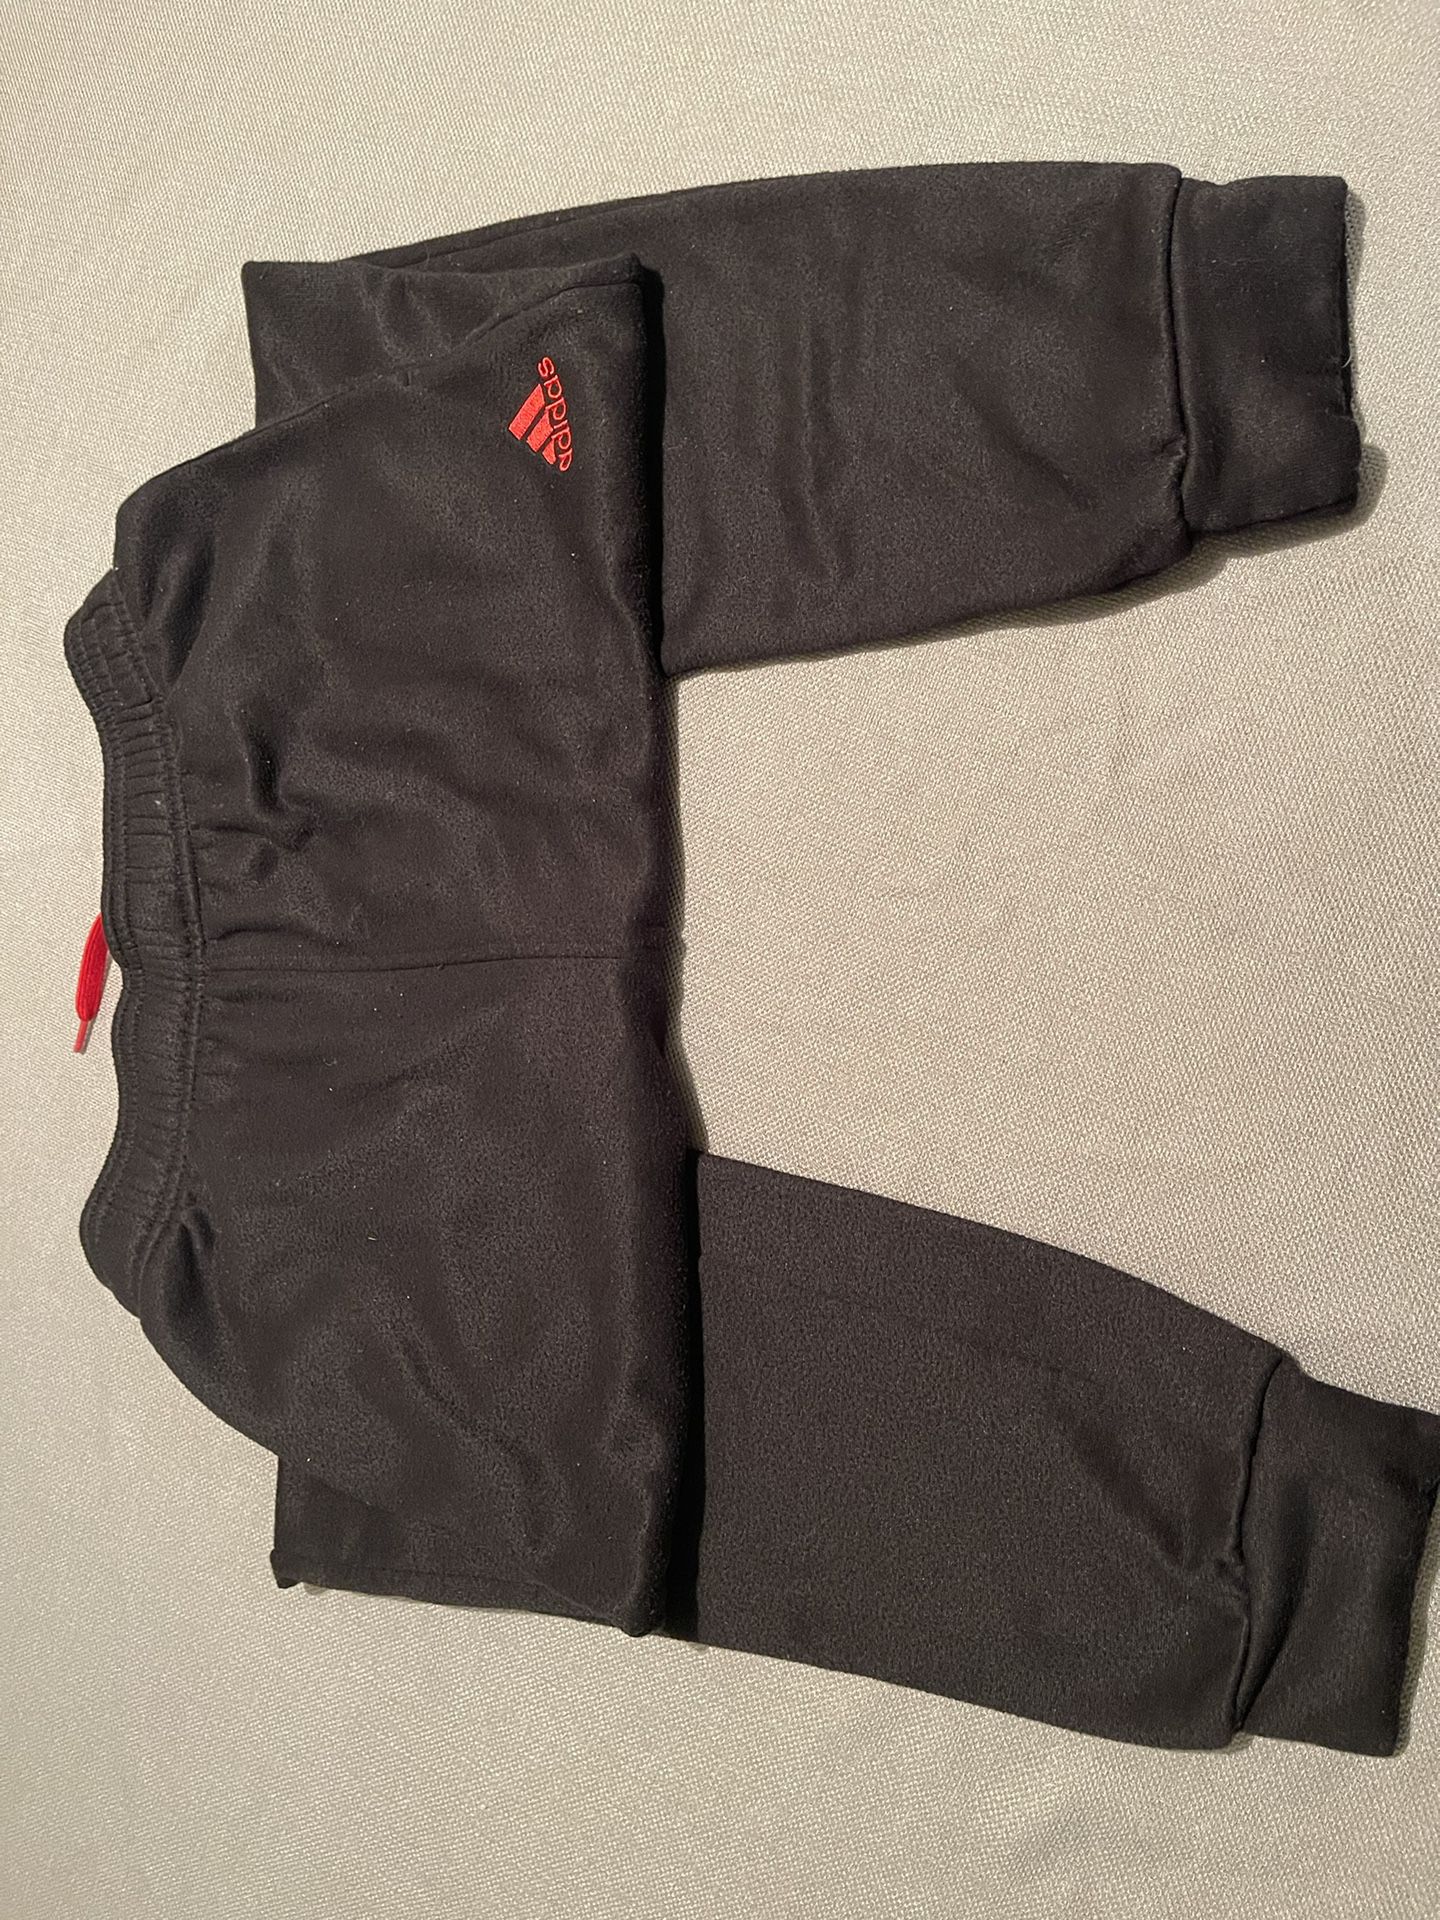 Adidas Climate Boys Black Fleece Jogger Pants Size Large